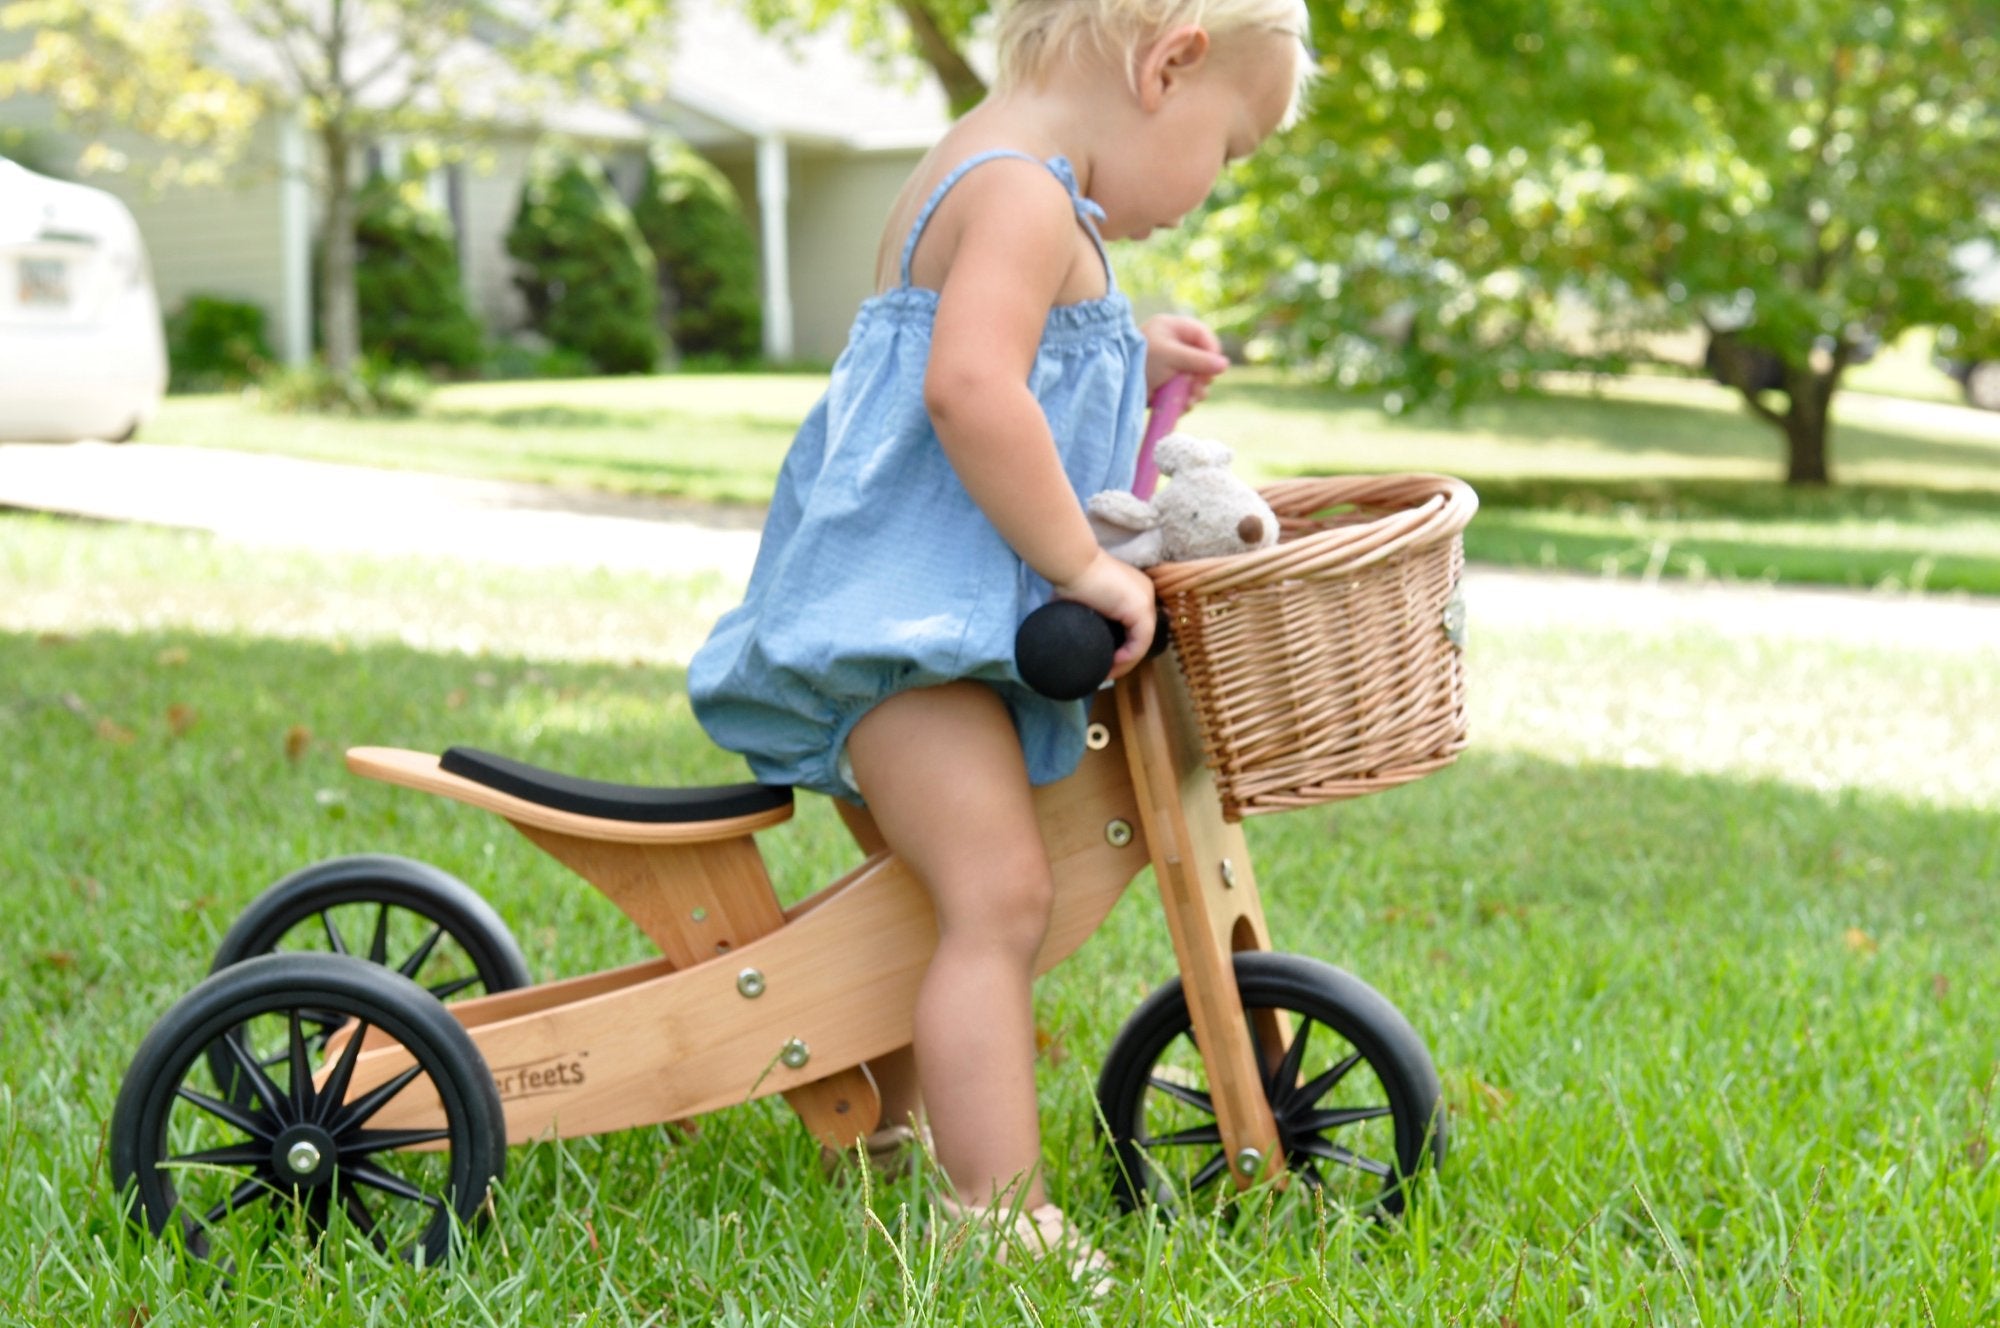 Kinderfeets | Tiny Tot / Balance Bike - 2-in-1 Bike